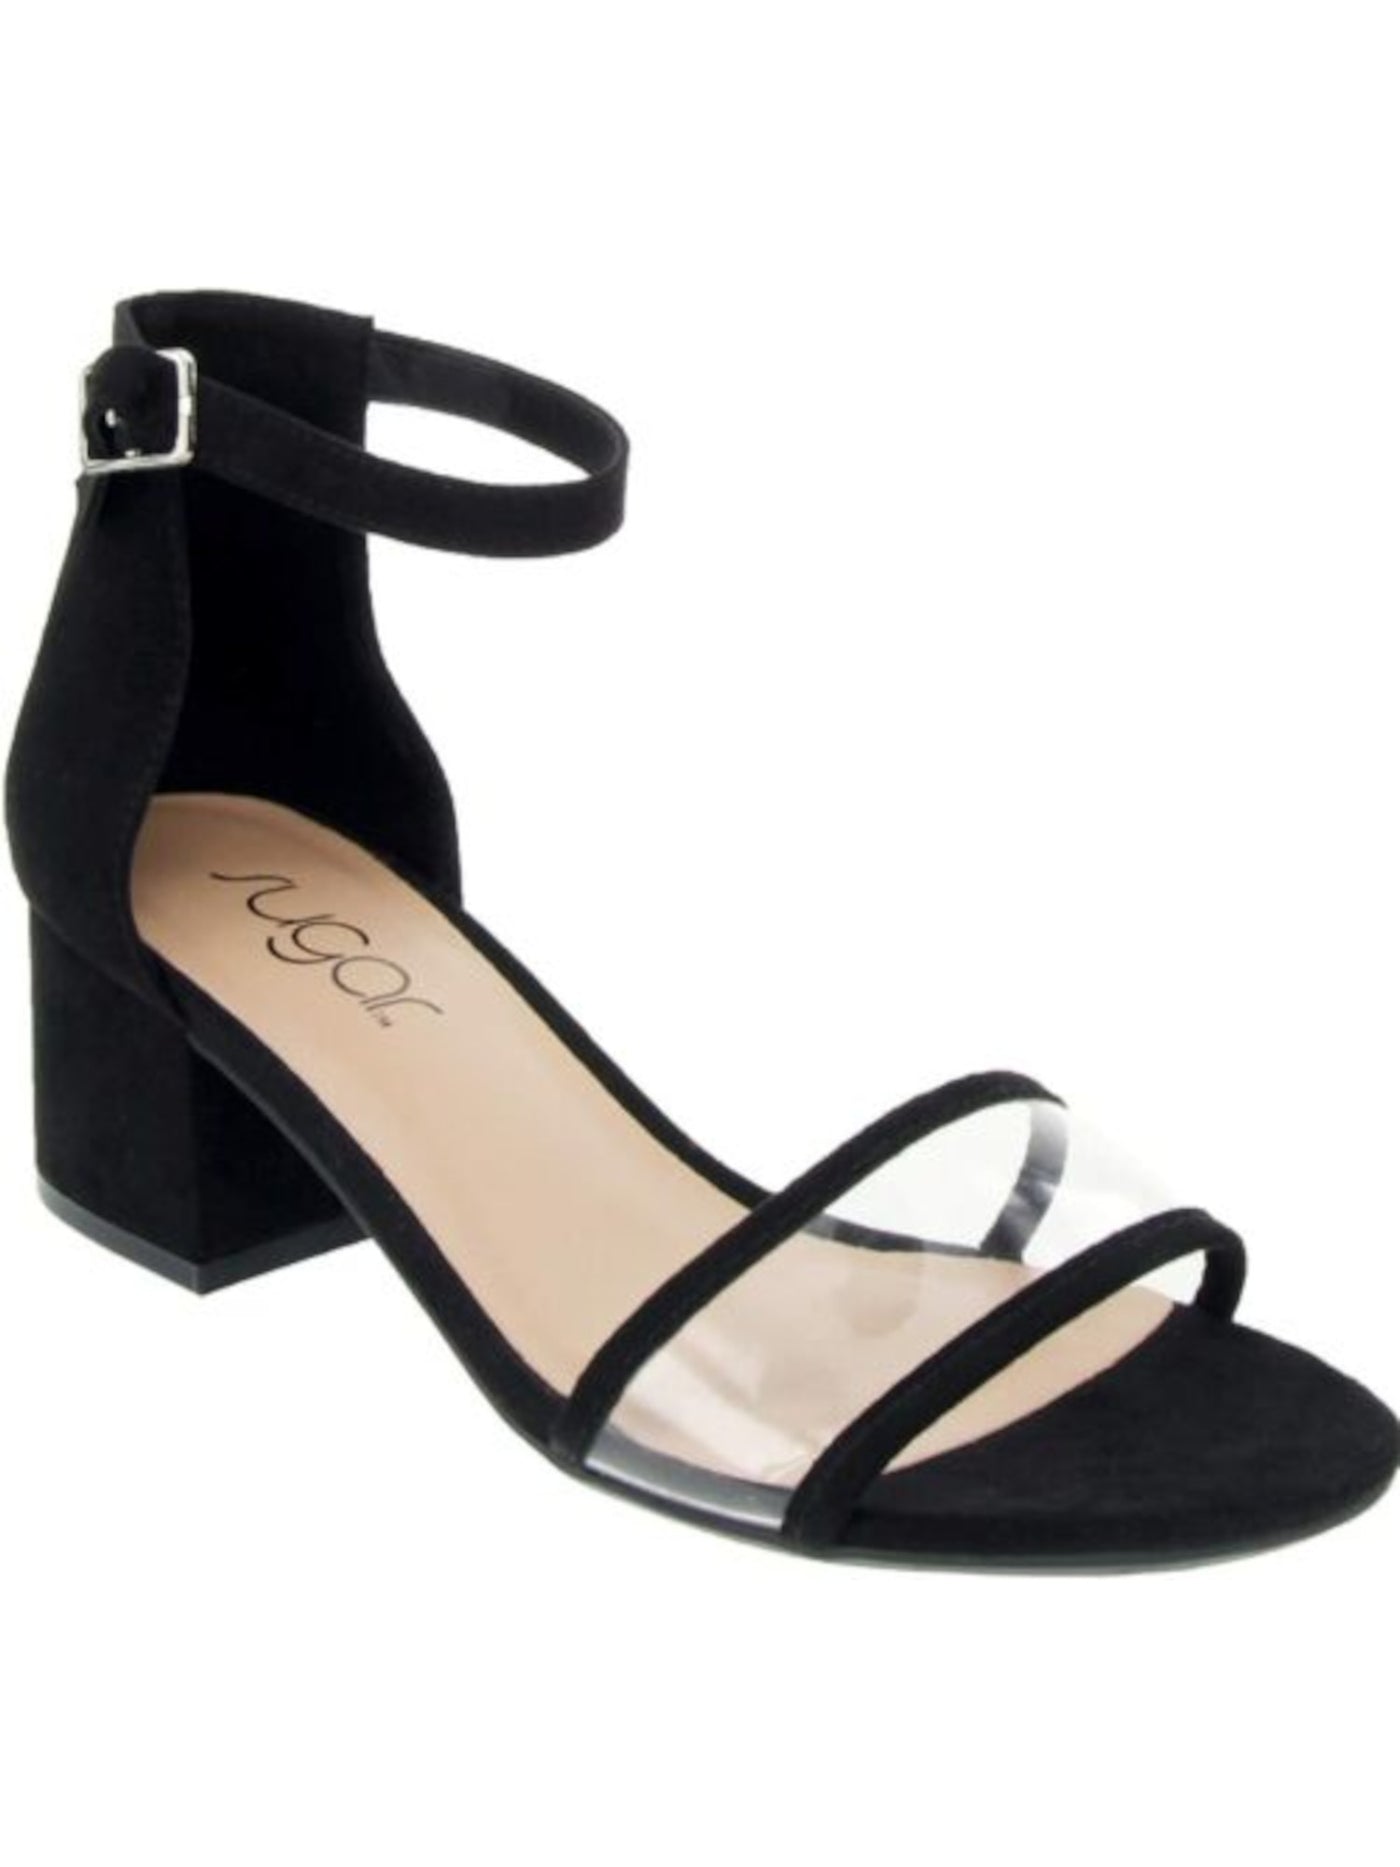 SUGAR Womens Black See-Through Strap Padded Comfort Noelle Round Toe Block Heel Buckle Dress Sandals Shoes 7.5